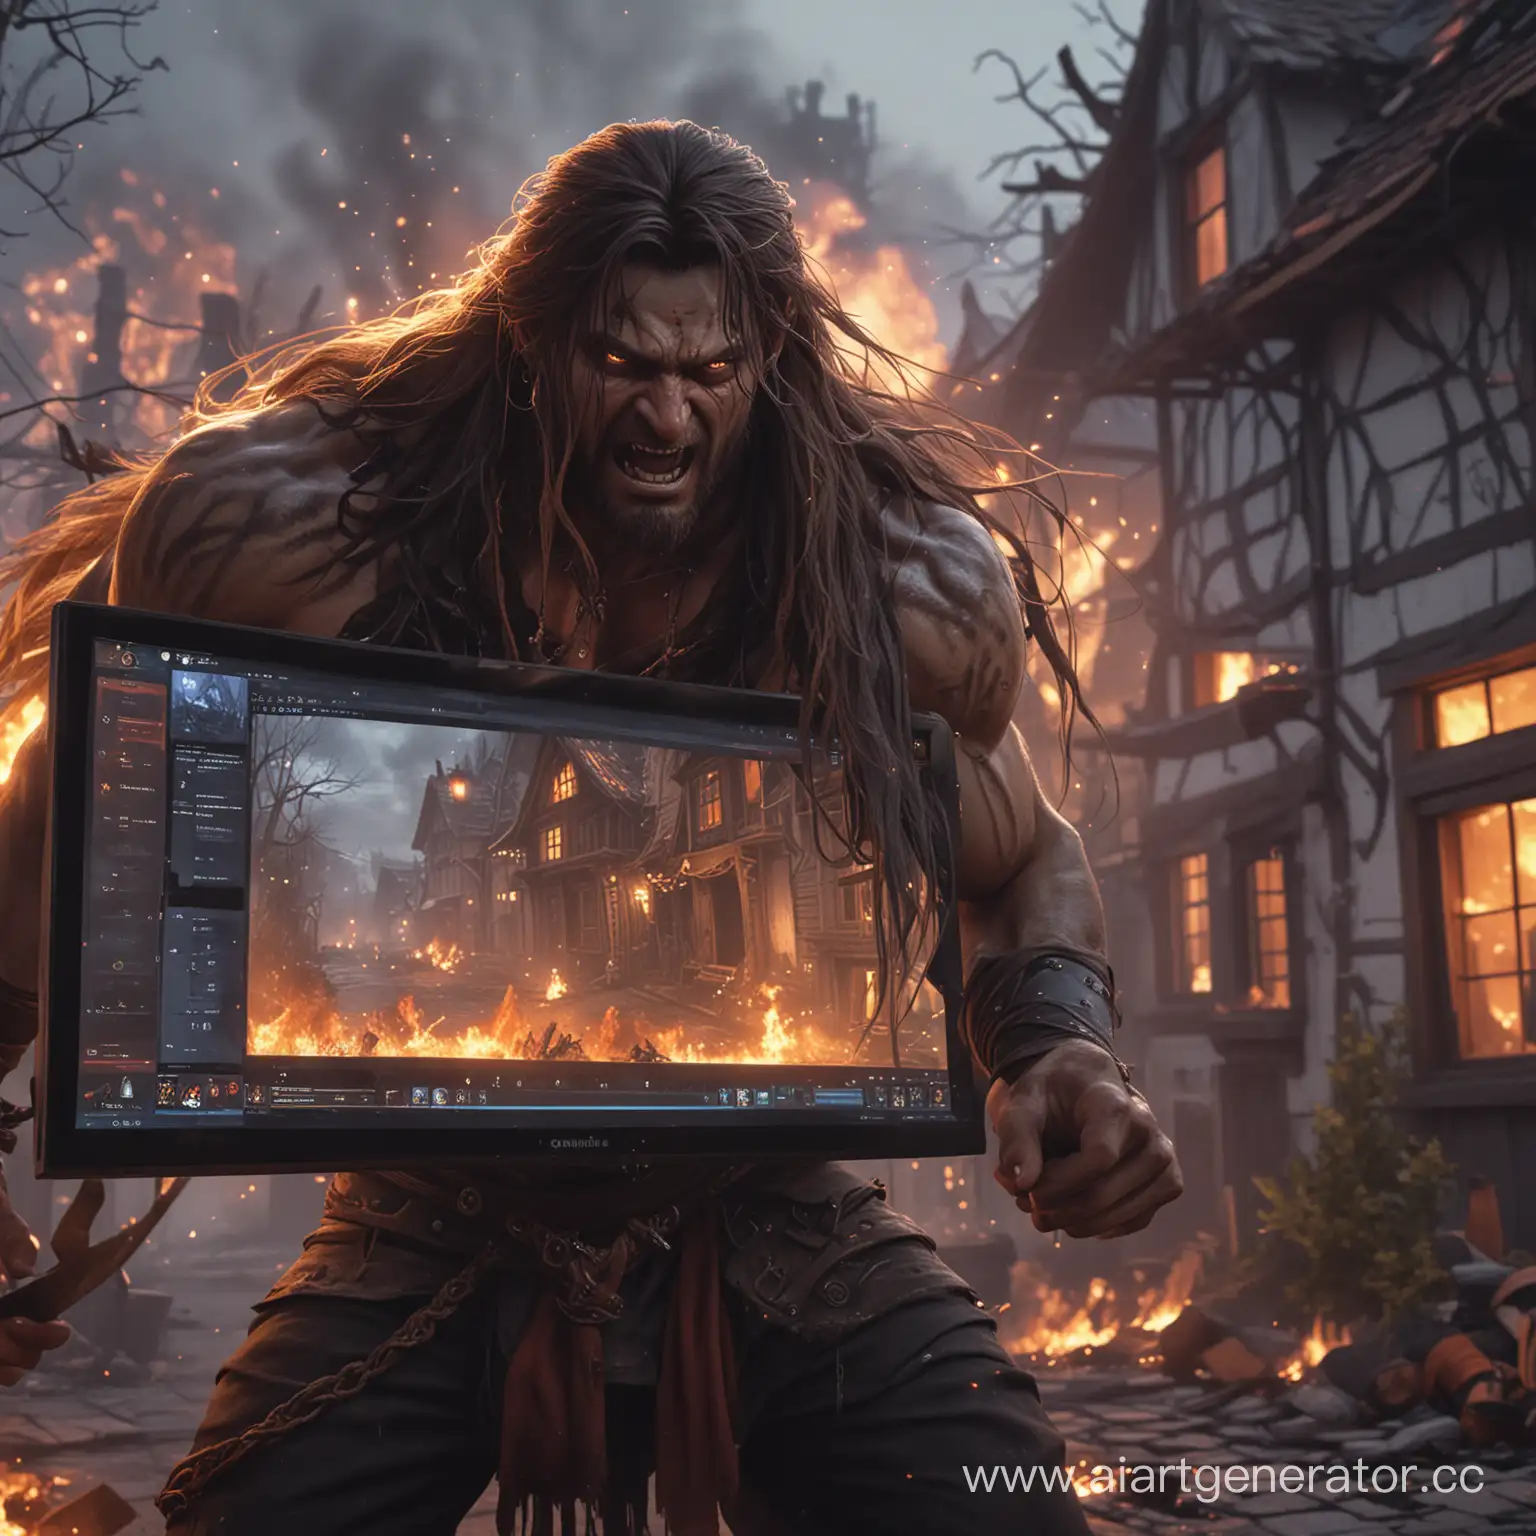 Magical-Berserker-Emerging-from-Burning-Houses-on-DIVINE-Studio-Games-Main-Screen